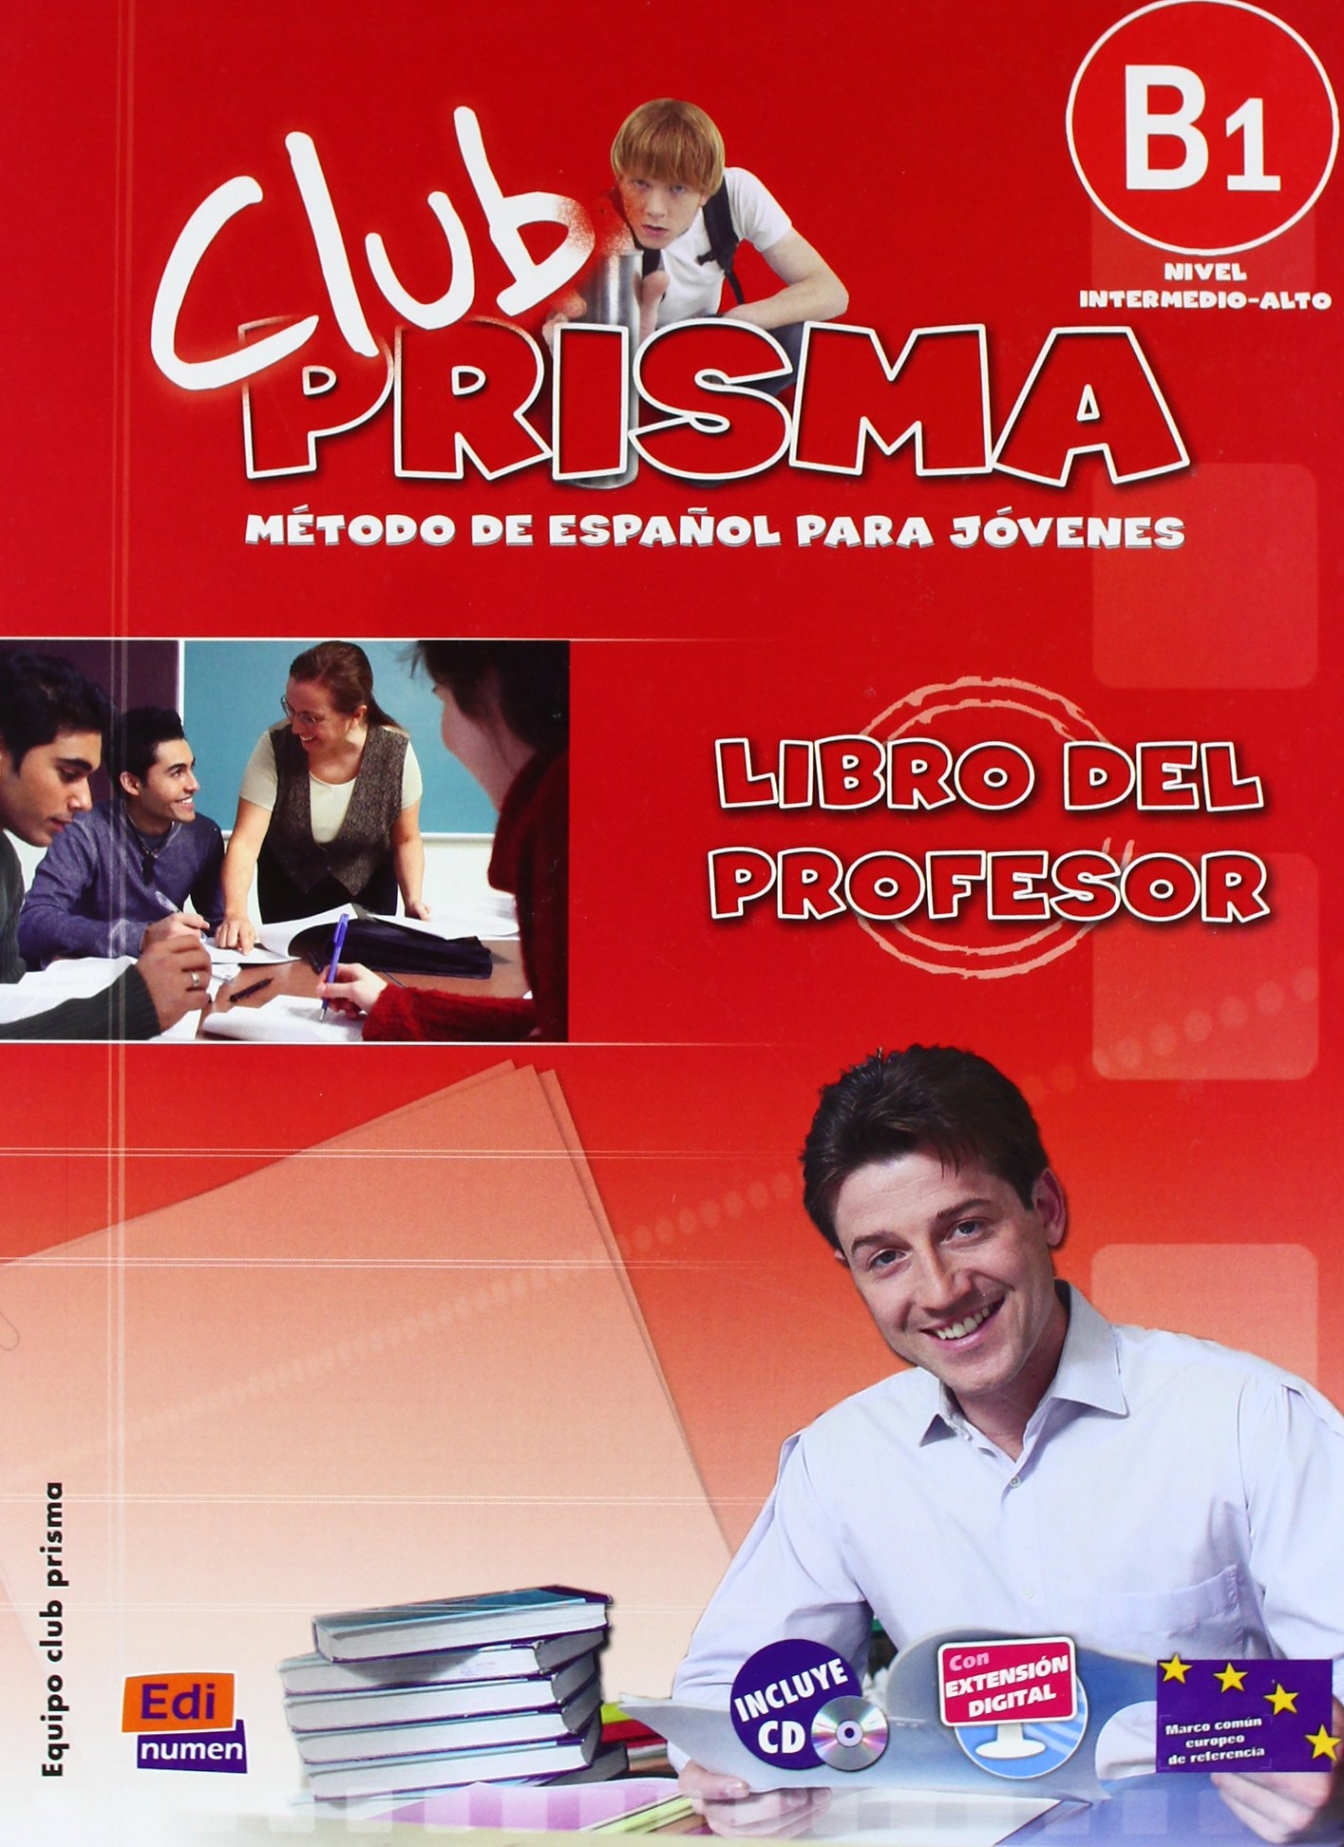 Координатор проекта: Maria Jose Gelabert - Club Prisma Nivel B1 - Libro del profesor + CD de audiciones 